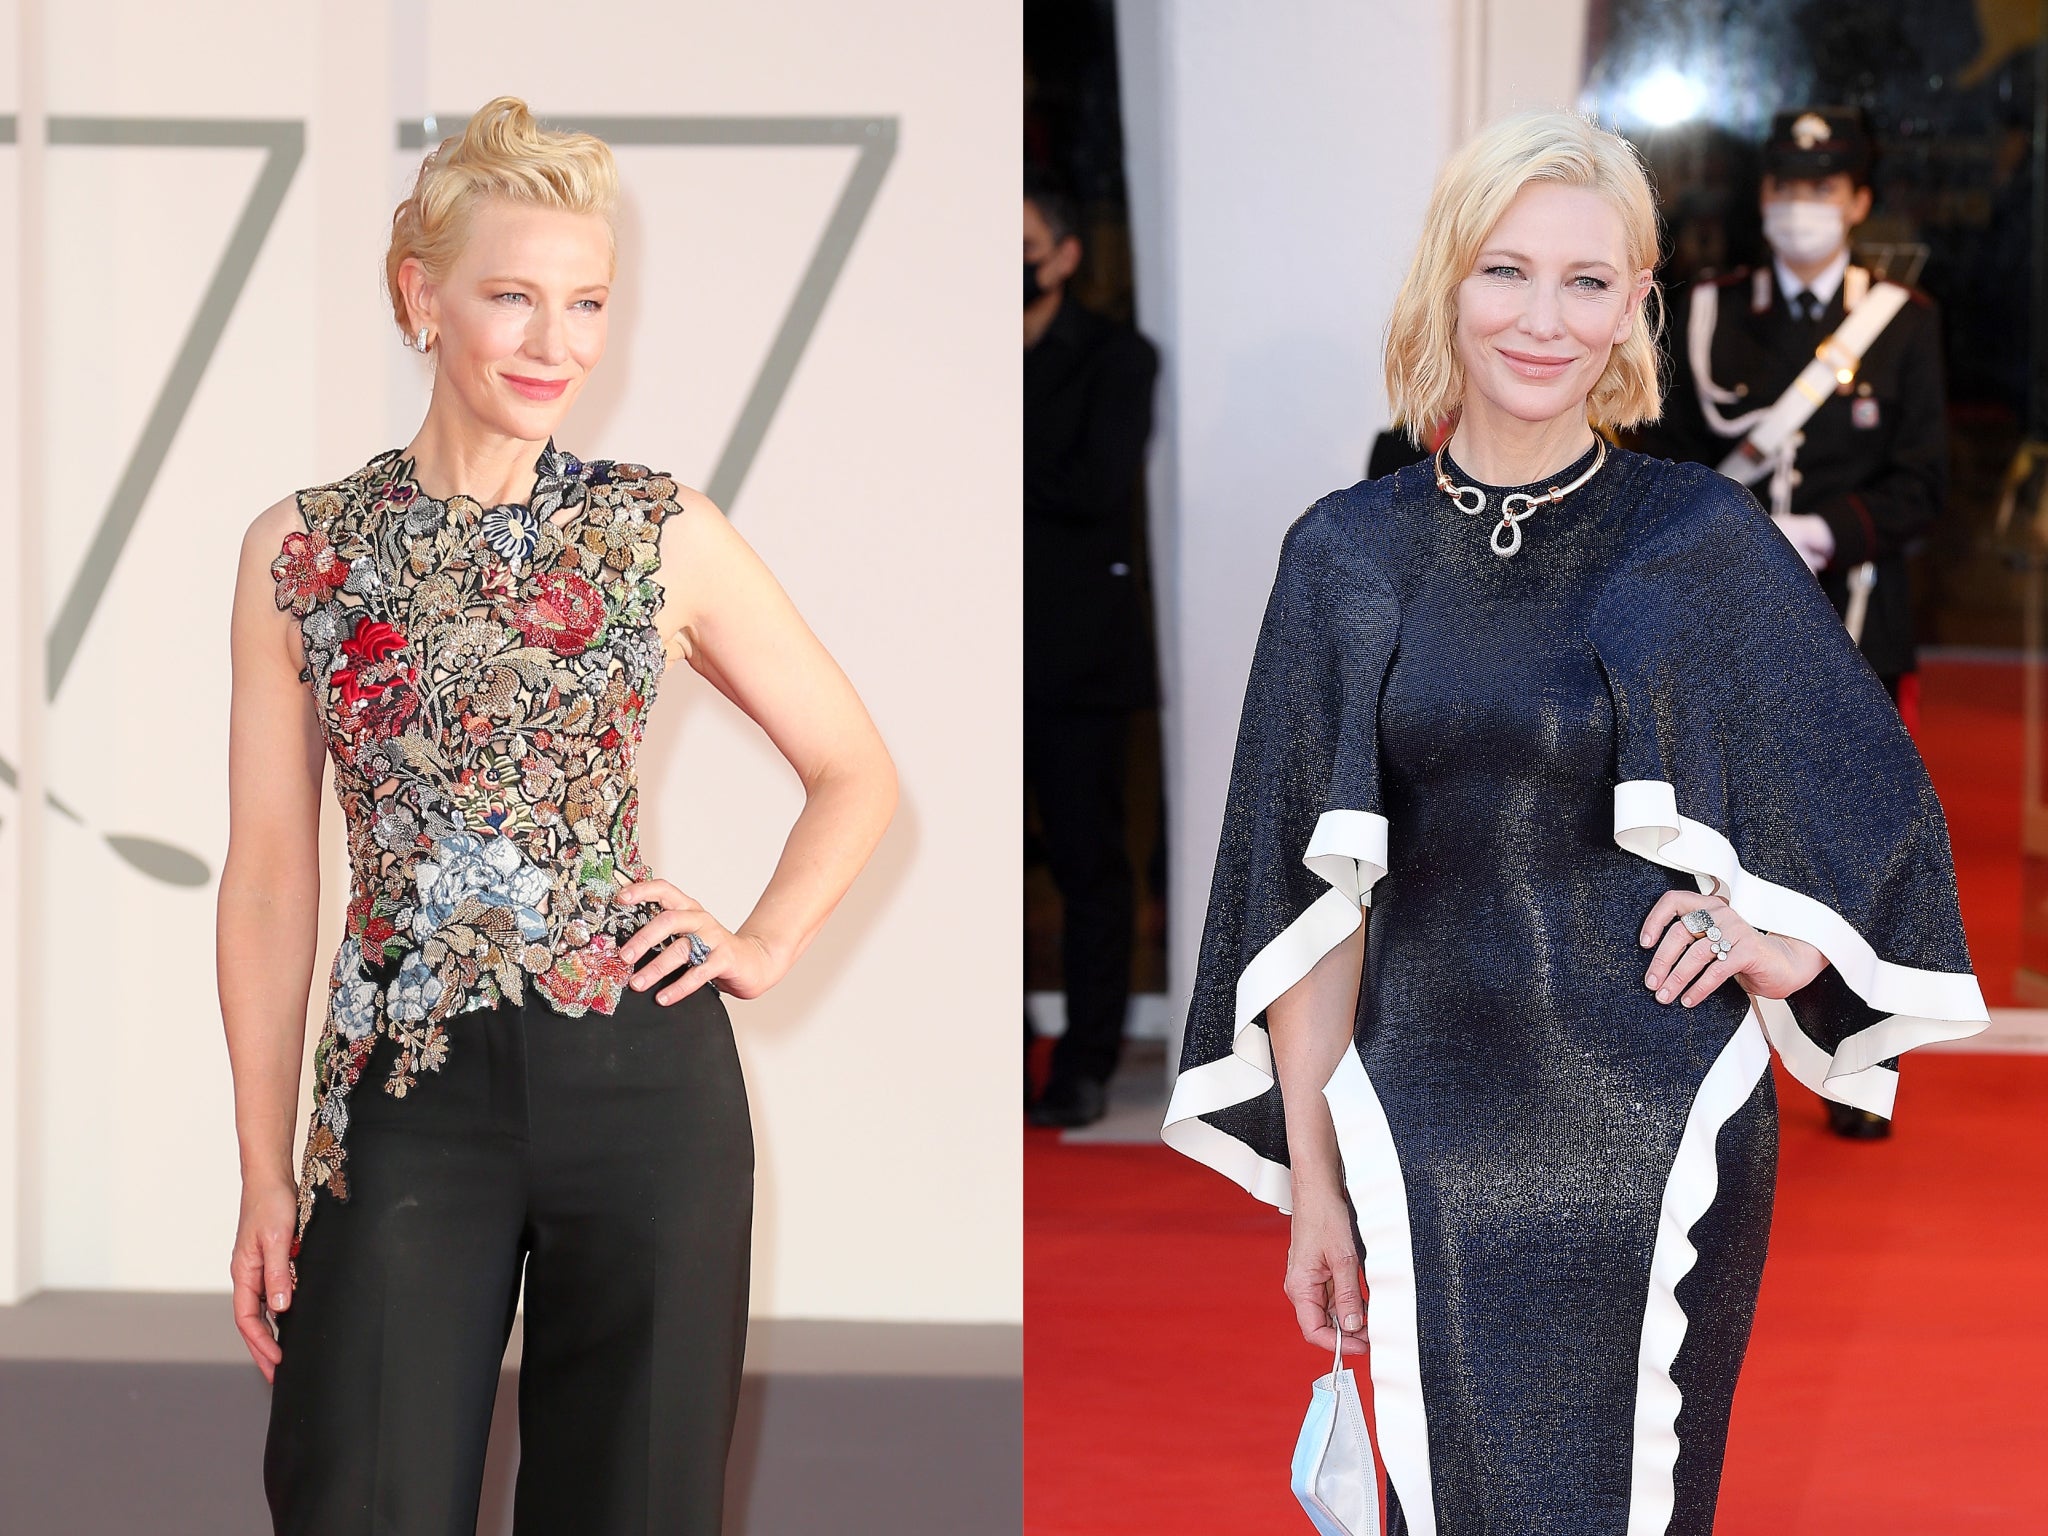 Cate Blanchett Wears Four Stylish Looks to Promote 'Carol': Photo